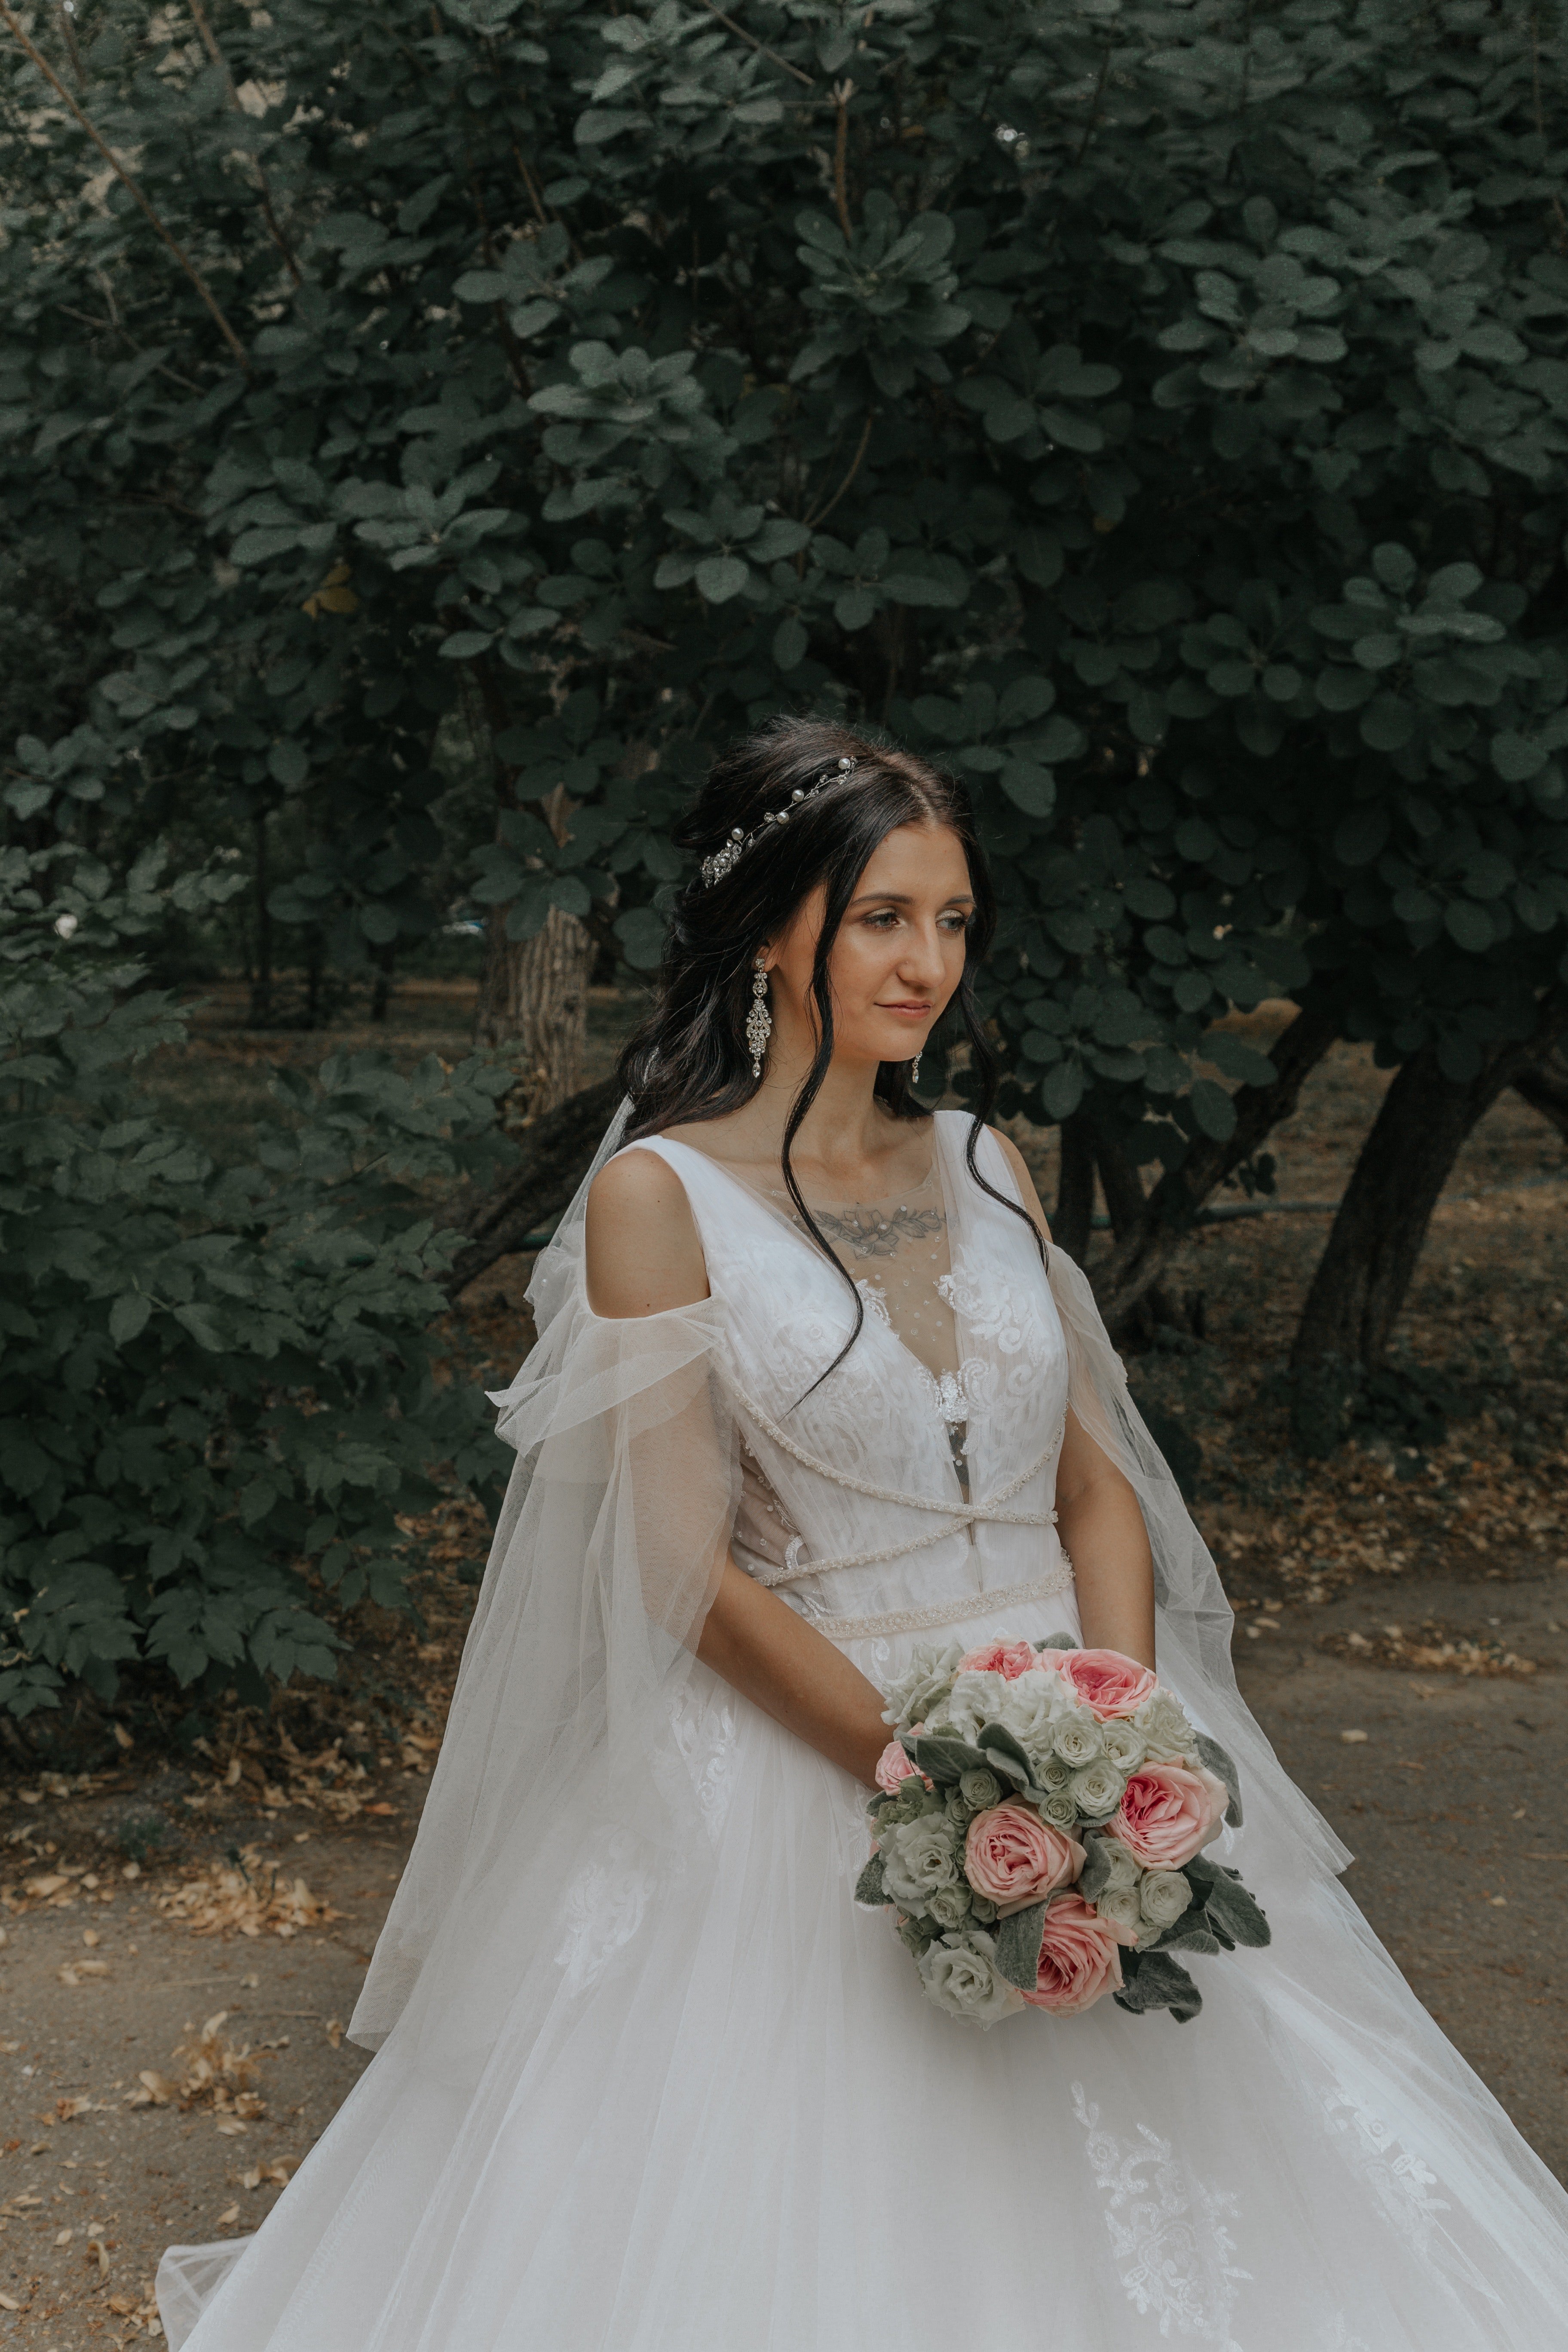 Mujer vestida de novia. | Foto: Pexels